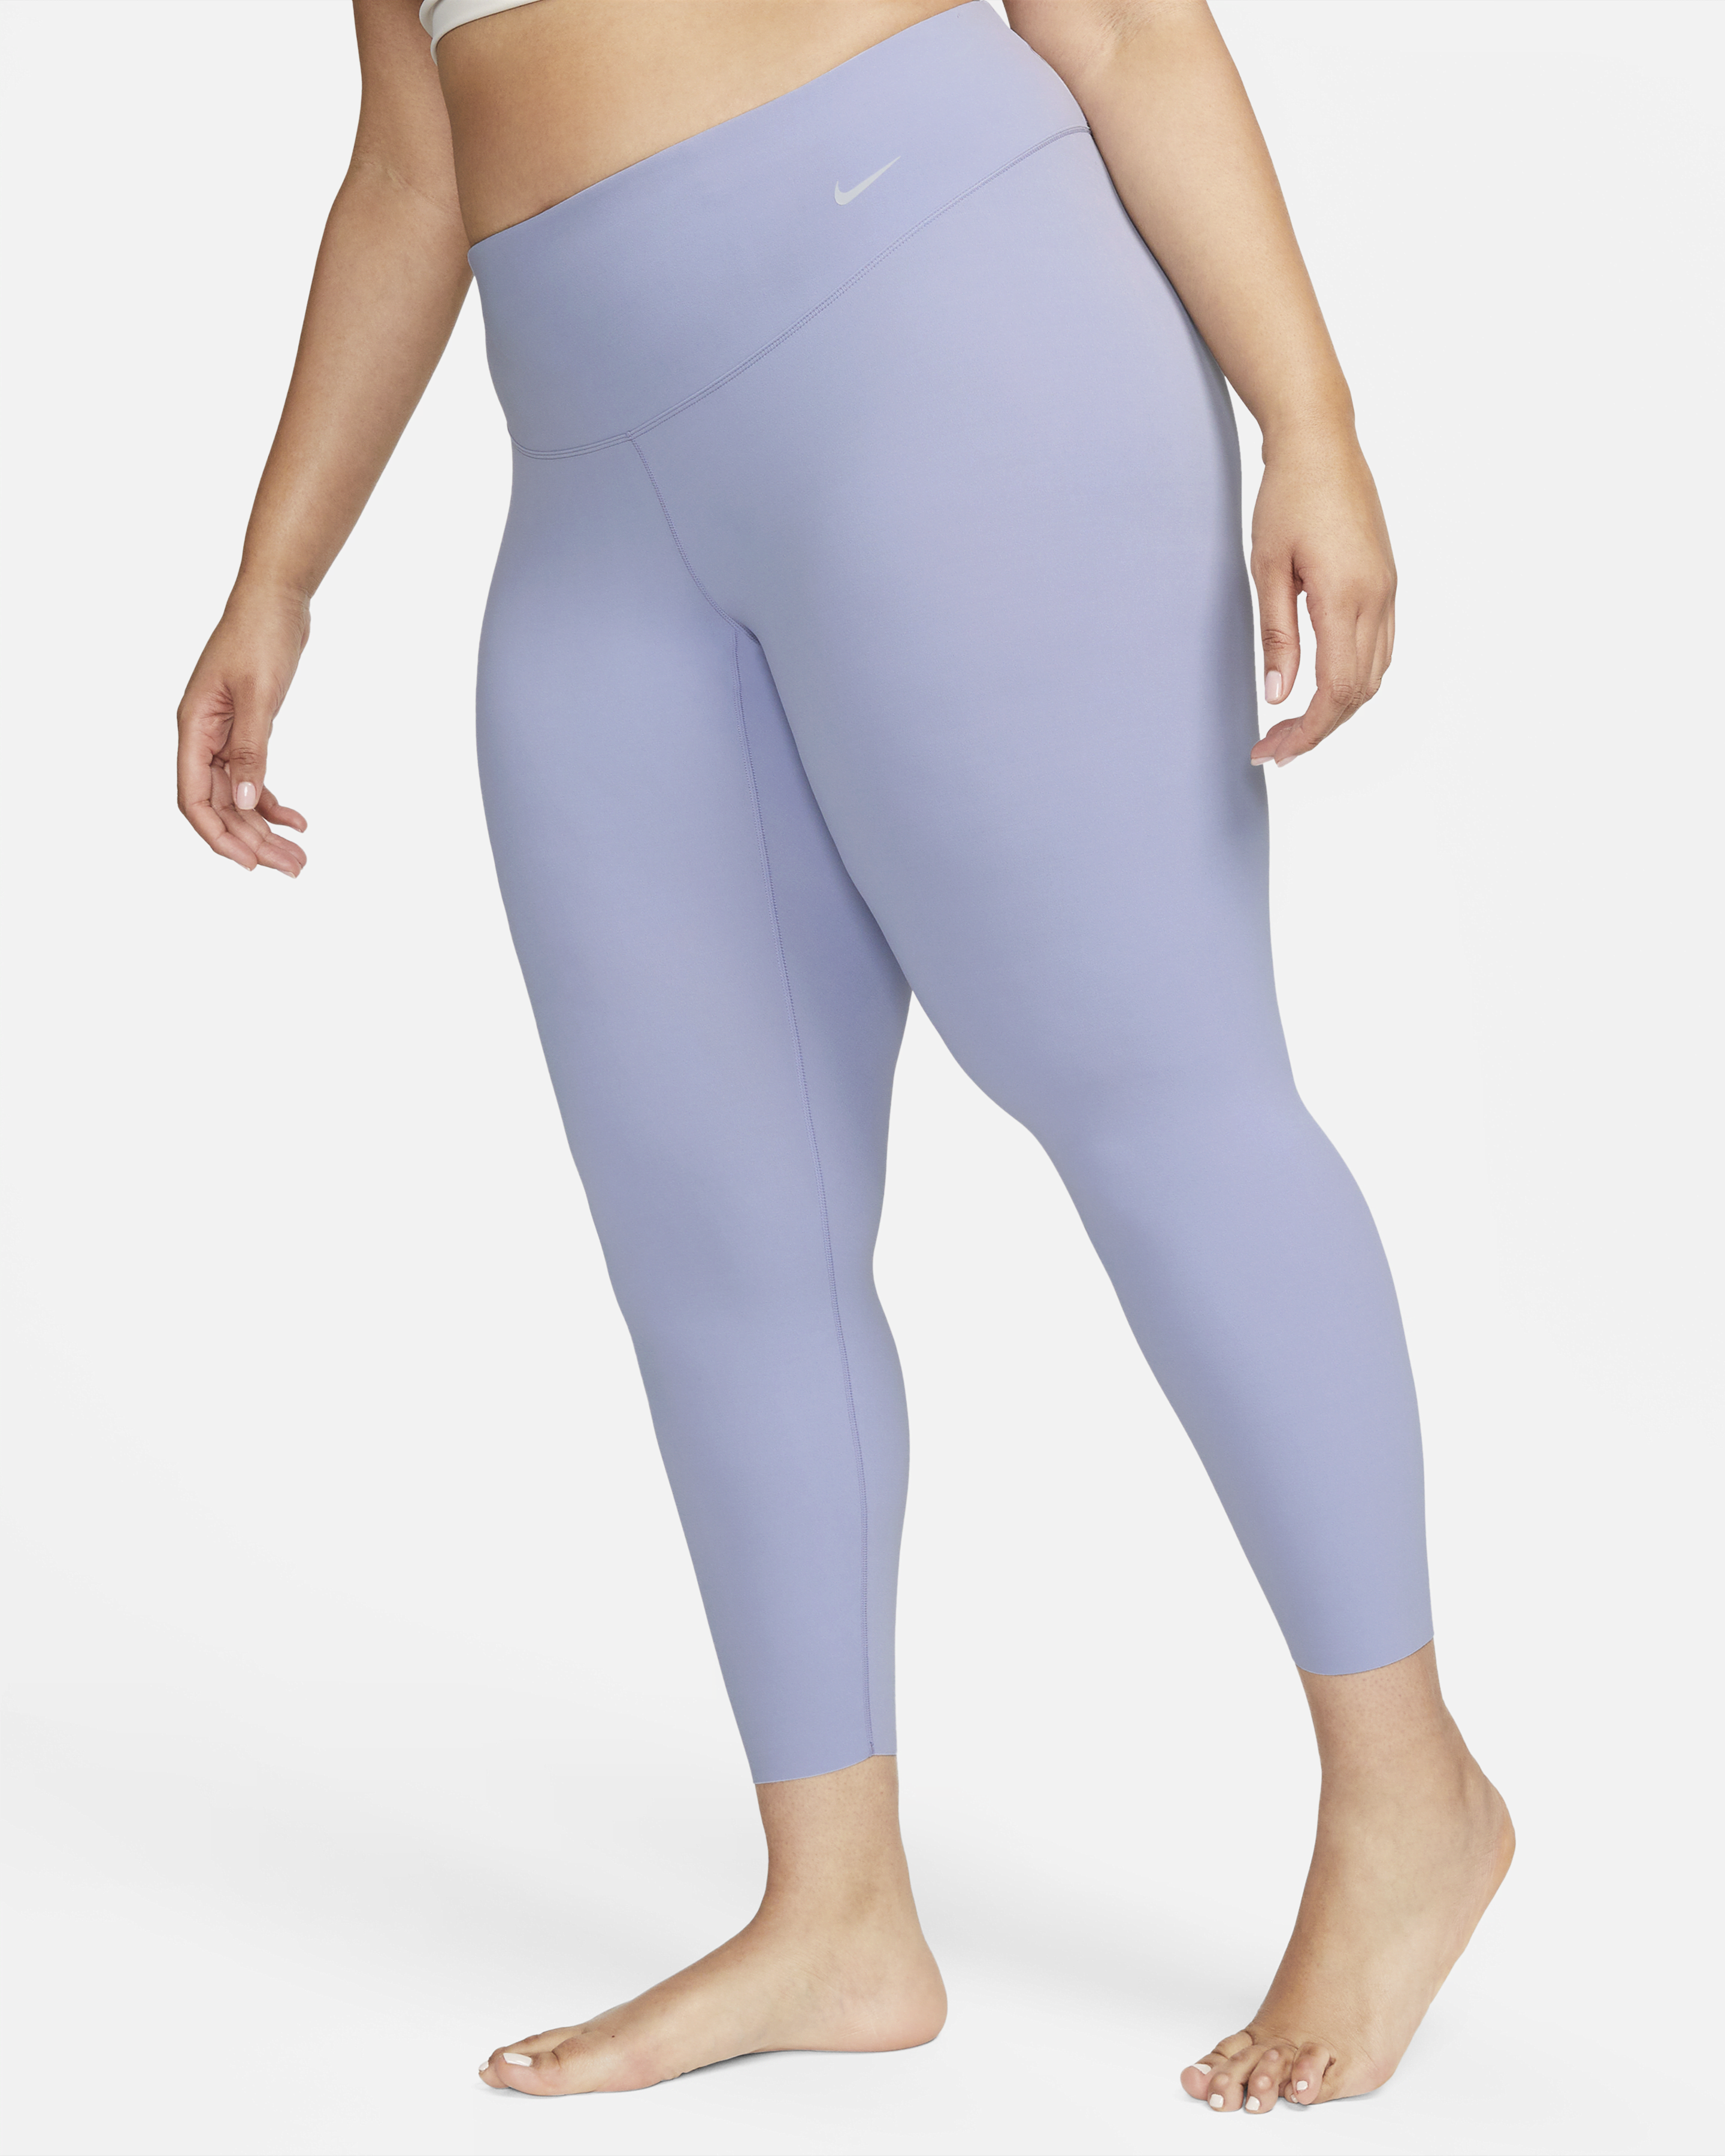 PINK - Victoria's Secret Fold Over Yoga Pants - $22 (63% Off